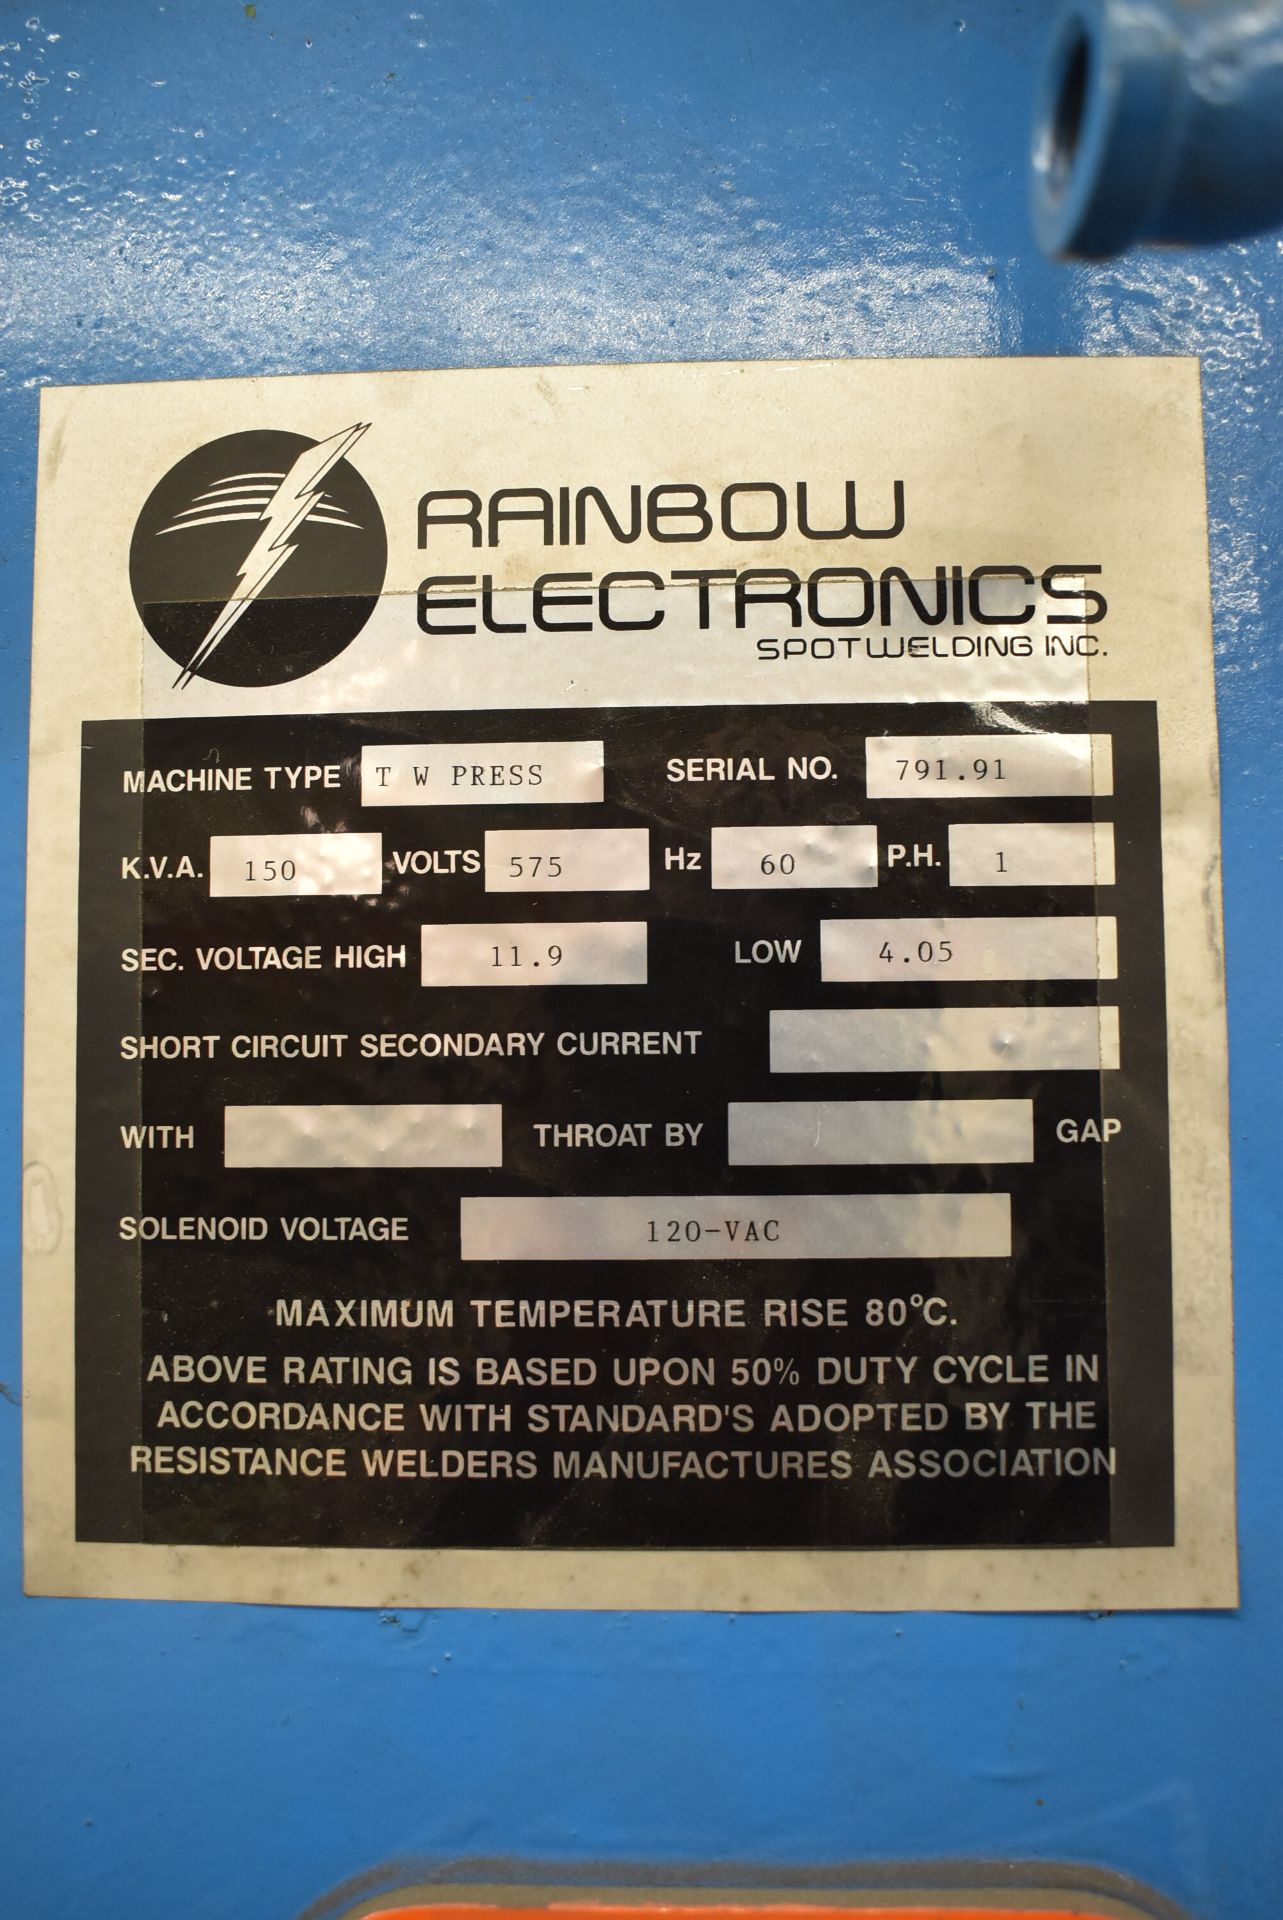 RAINBOW ELECTRONICS TW PRESS 150 KVA SPOT WELDER WITH 26" THROAT, MEDAR DIGITAL CONTROL, FOOT PEDAL, - Image 6 of 7